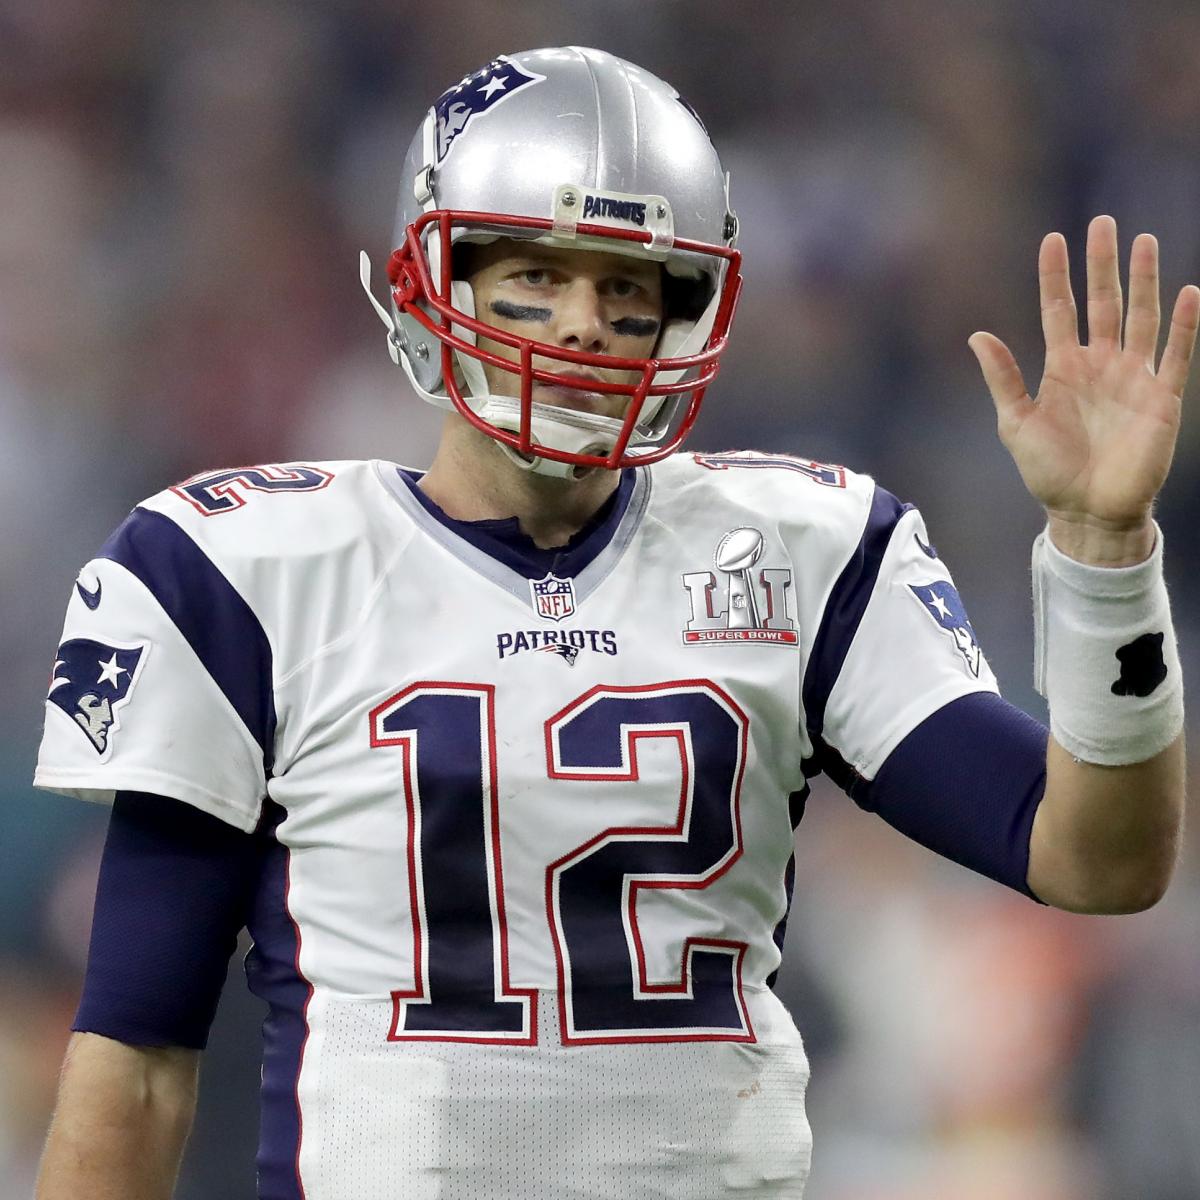 Take a look at the New England Patriots Super Bowl LI jerseys